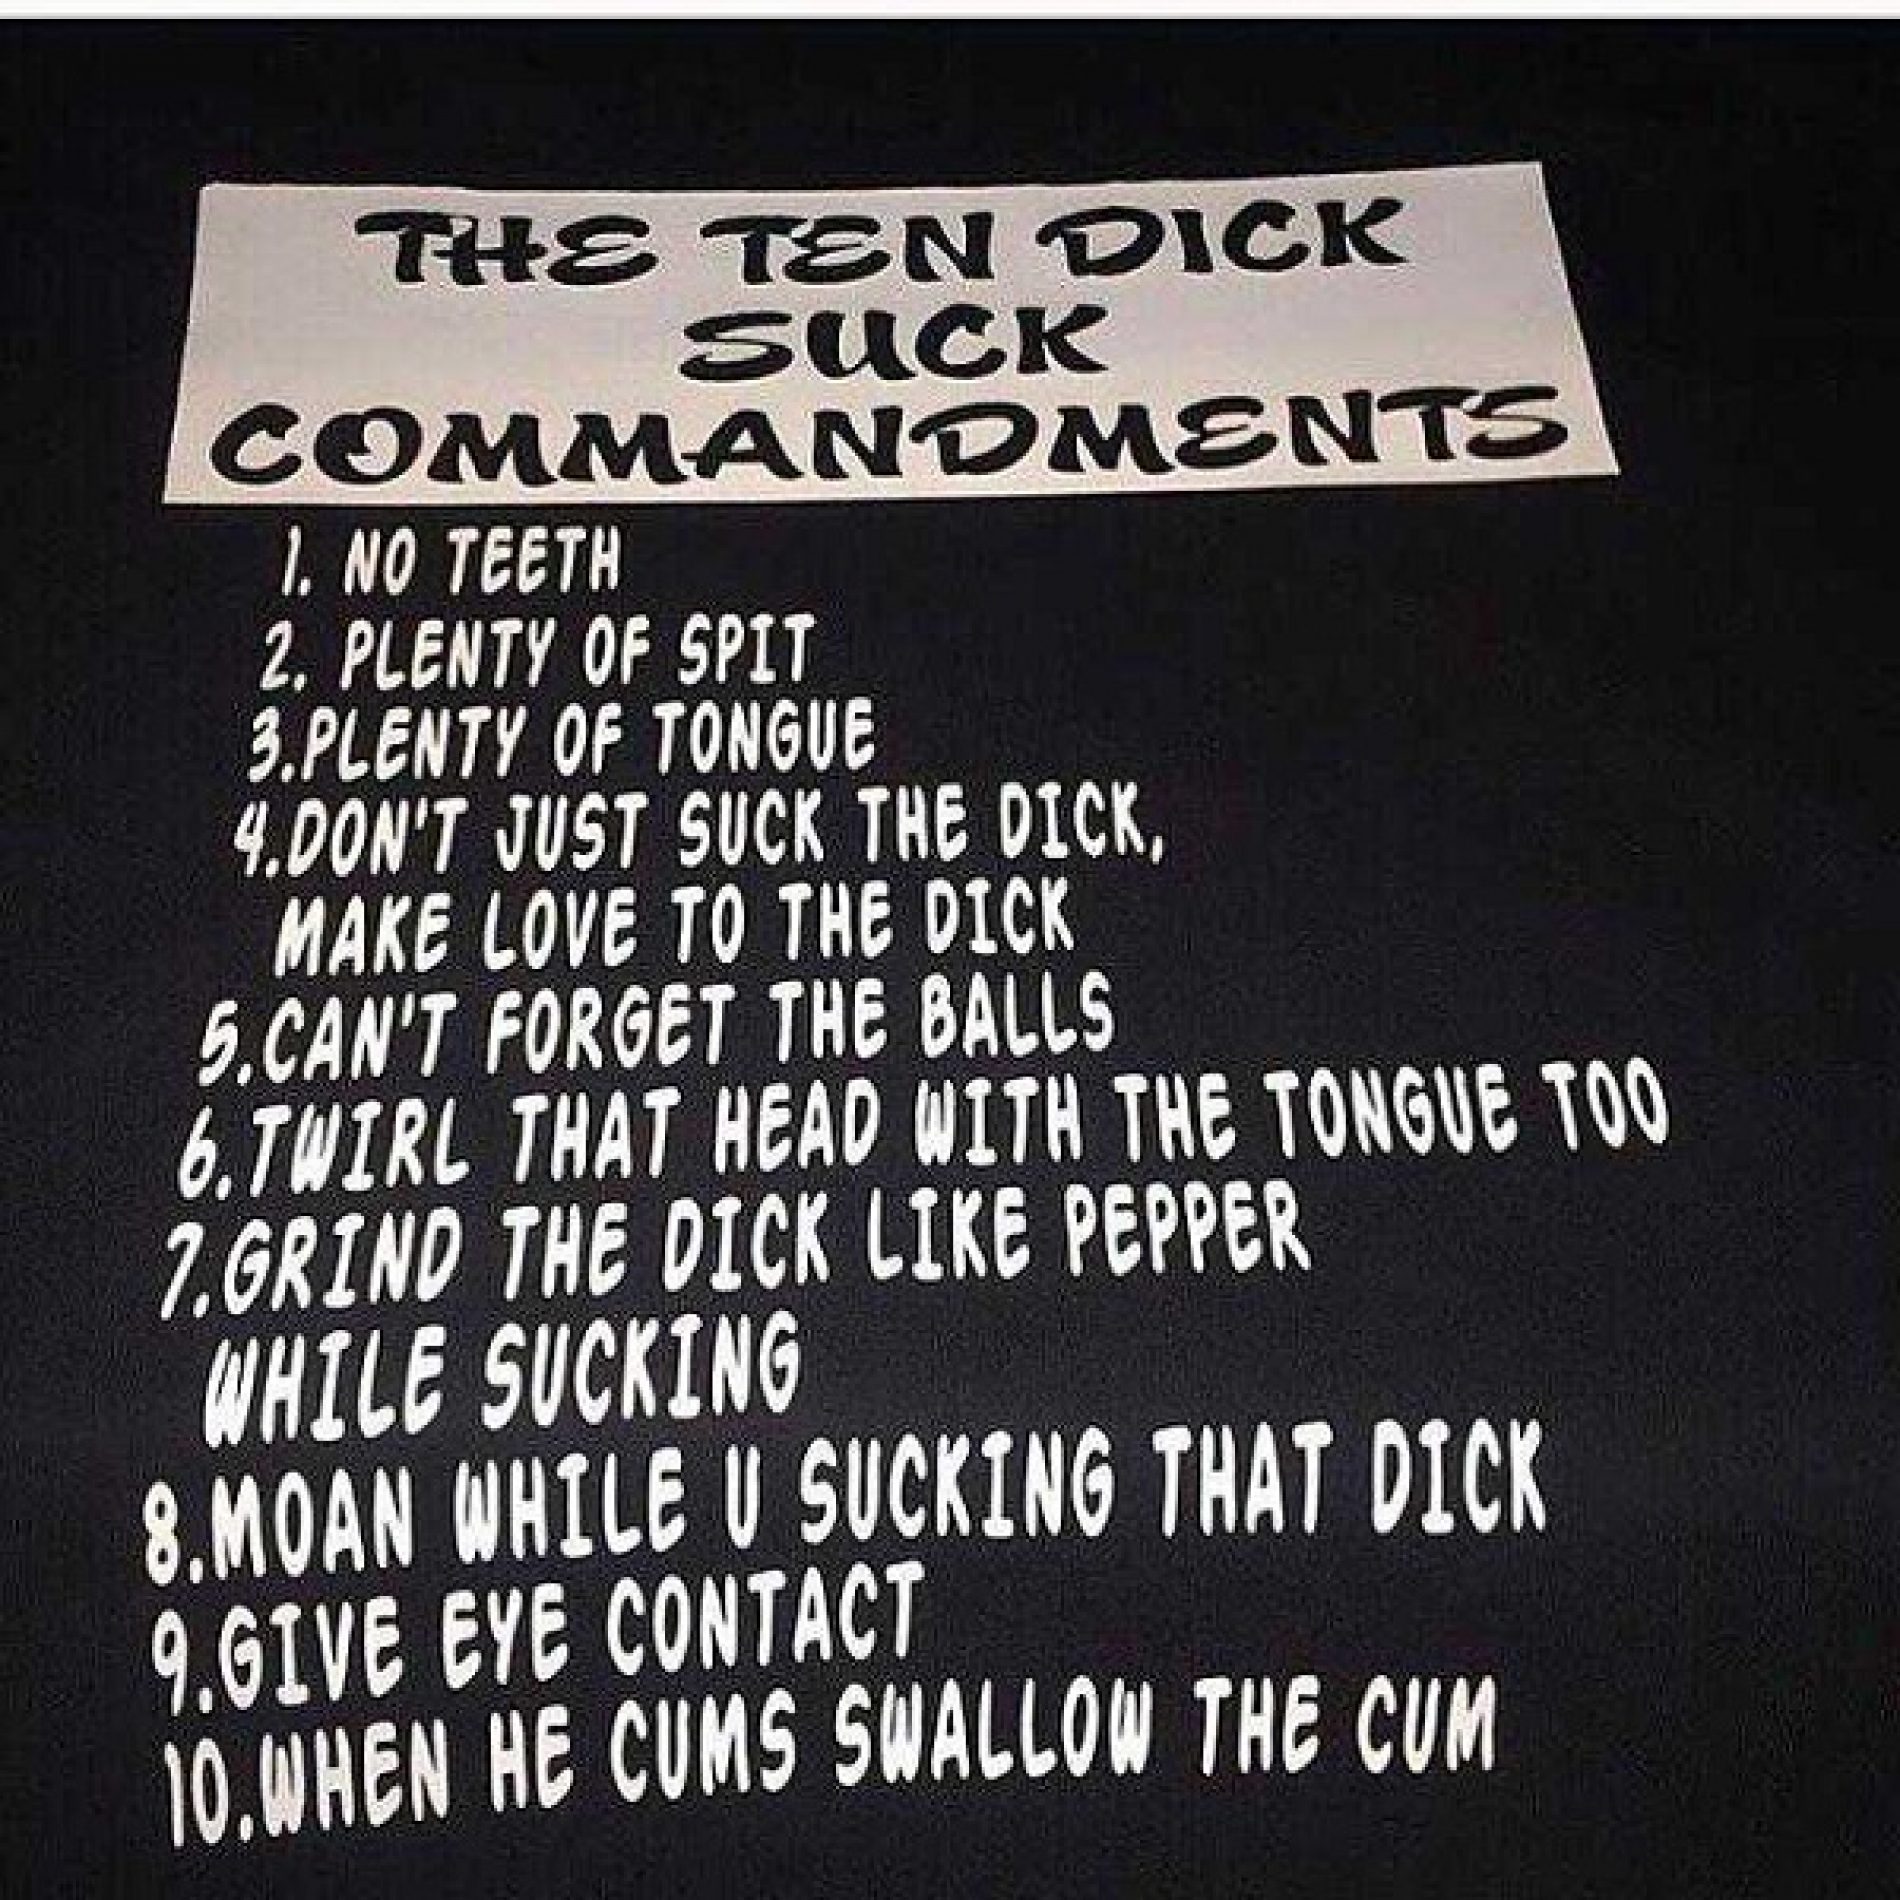 10 commandents of sucking dick